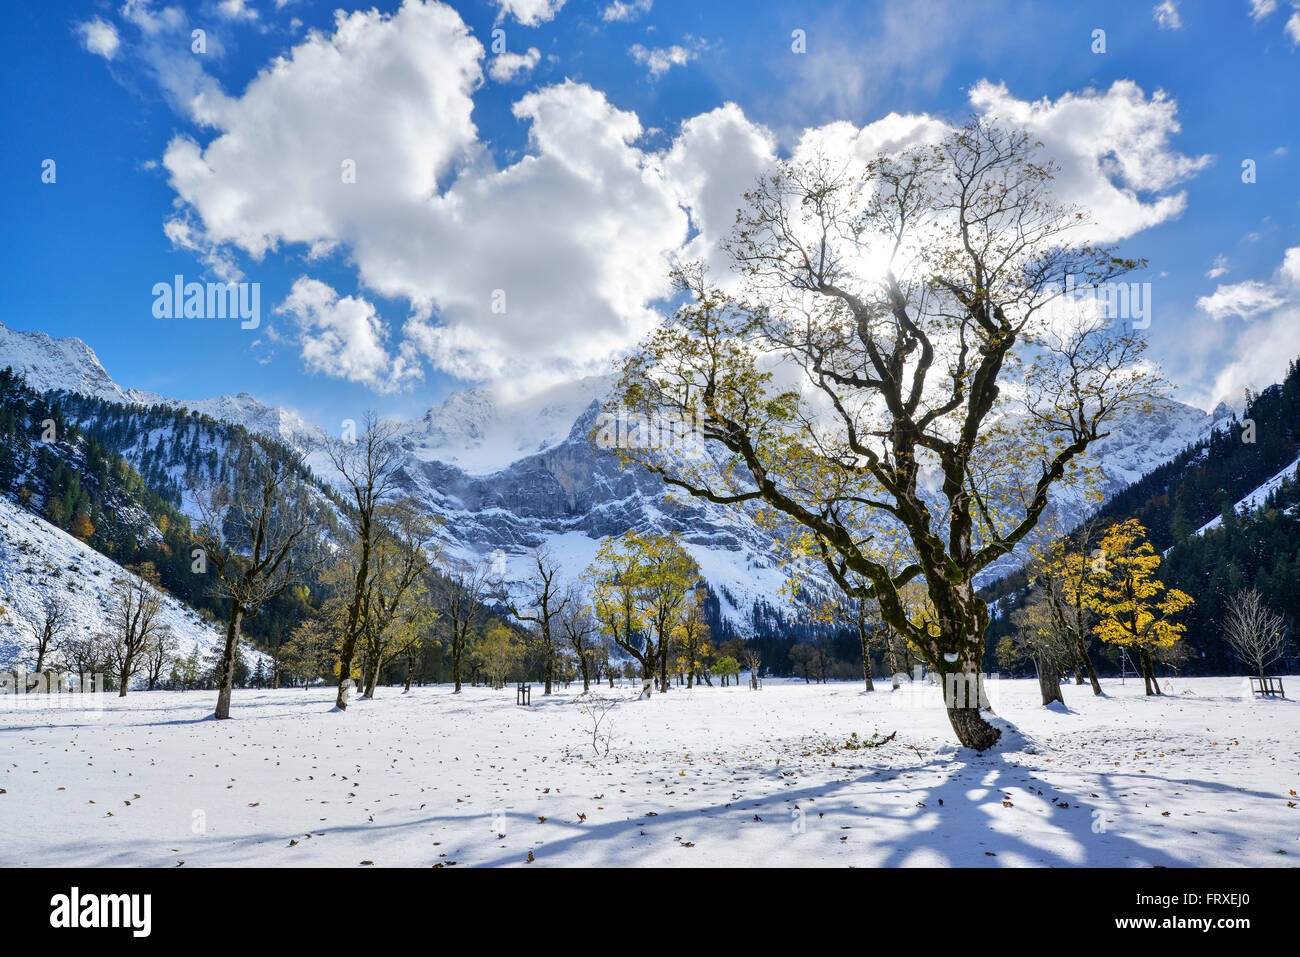 Les érables avec gamme Karwendel en arrière-plan, Grosser Ahornboden, FRA, réserve naturelle de Karwendel, gamme de Karwendel, Tyrol, Autriche Banque D'Images